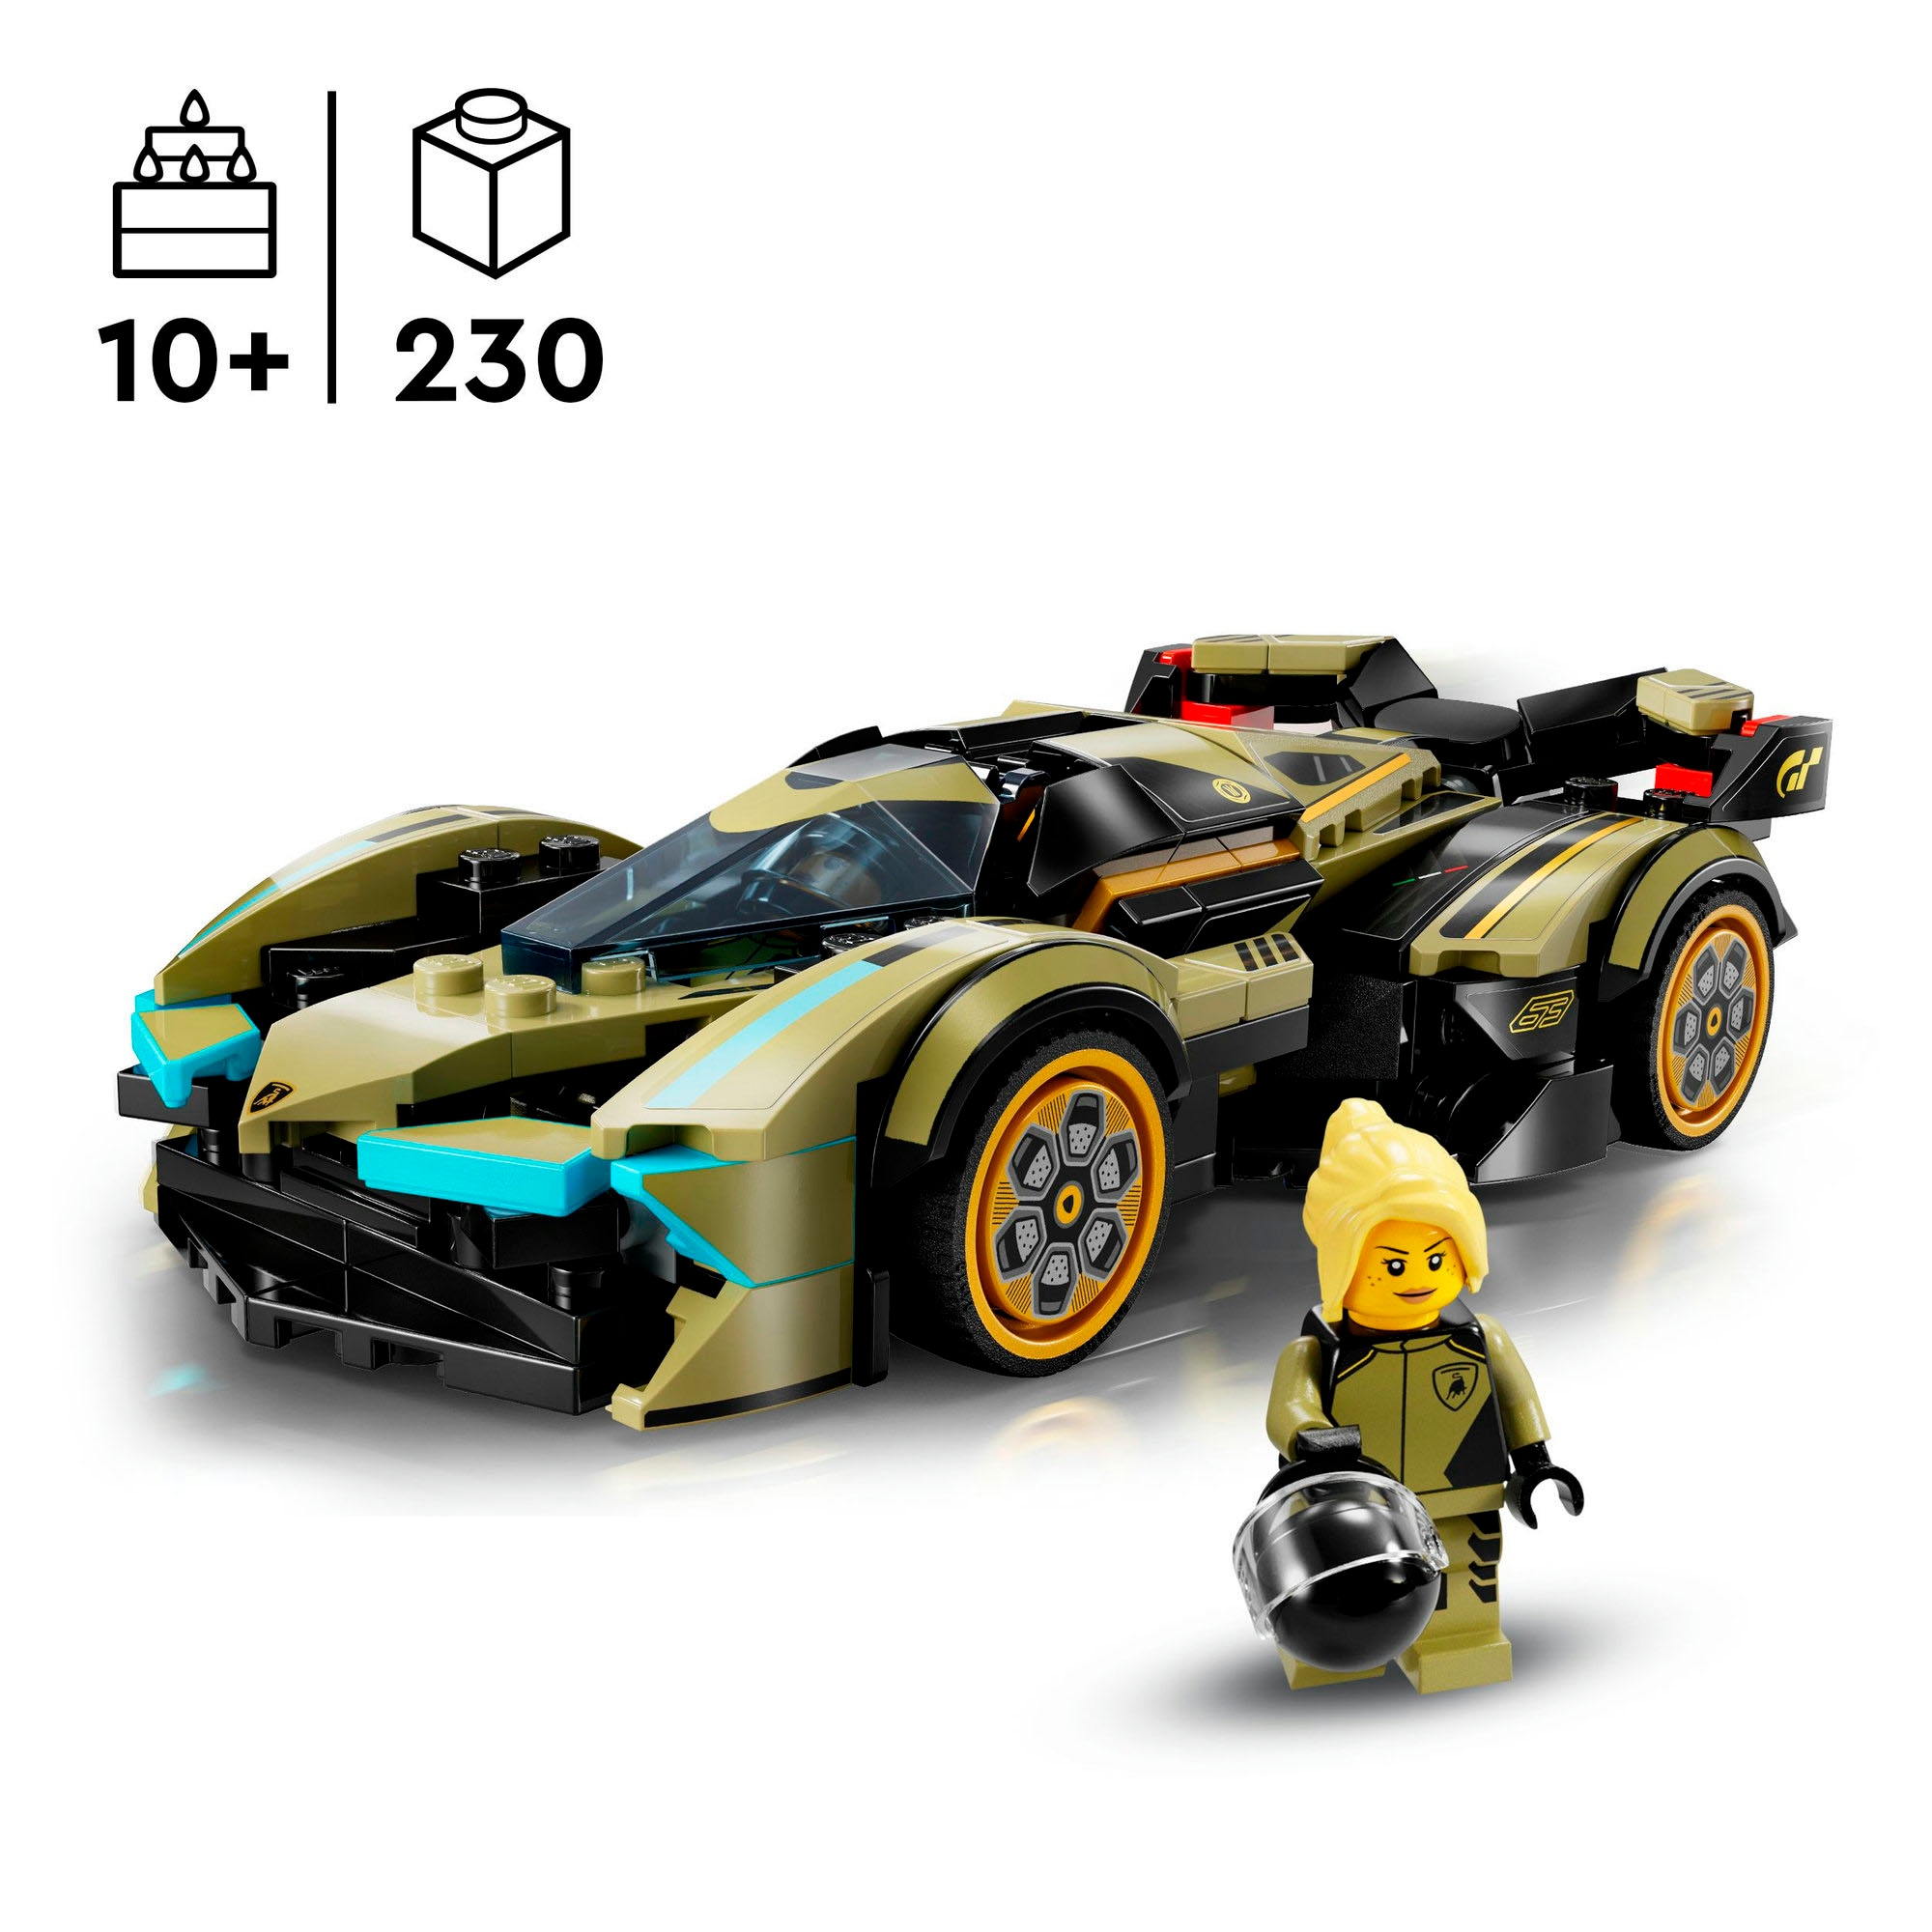 LEGO® Konstruktionsspielsteine »Lamborghini Lambo V12 Vision GT Supersportwagen (76923)«, (230 St.), LEGO Speed Champions; Made in Europe